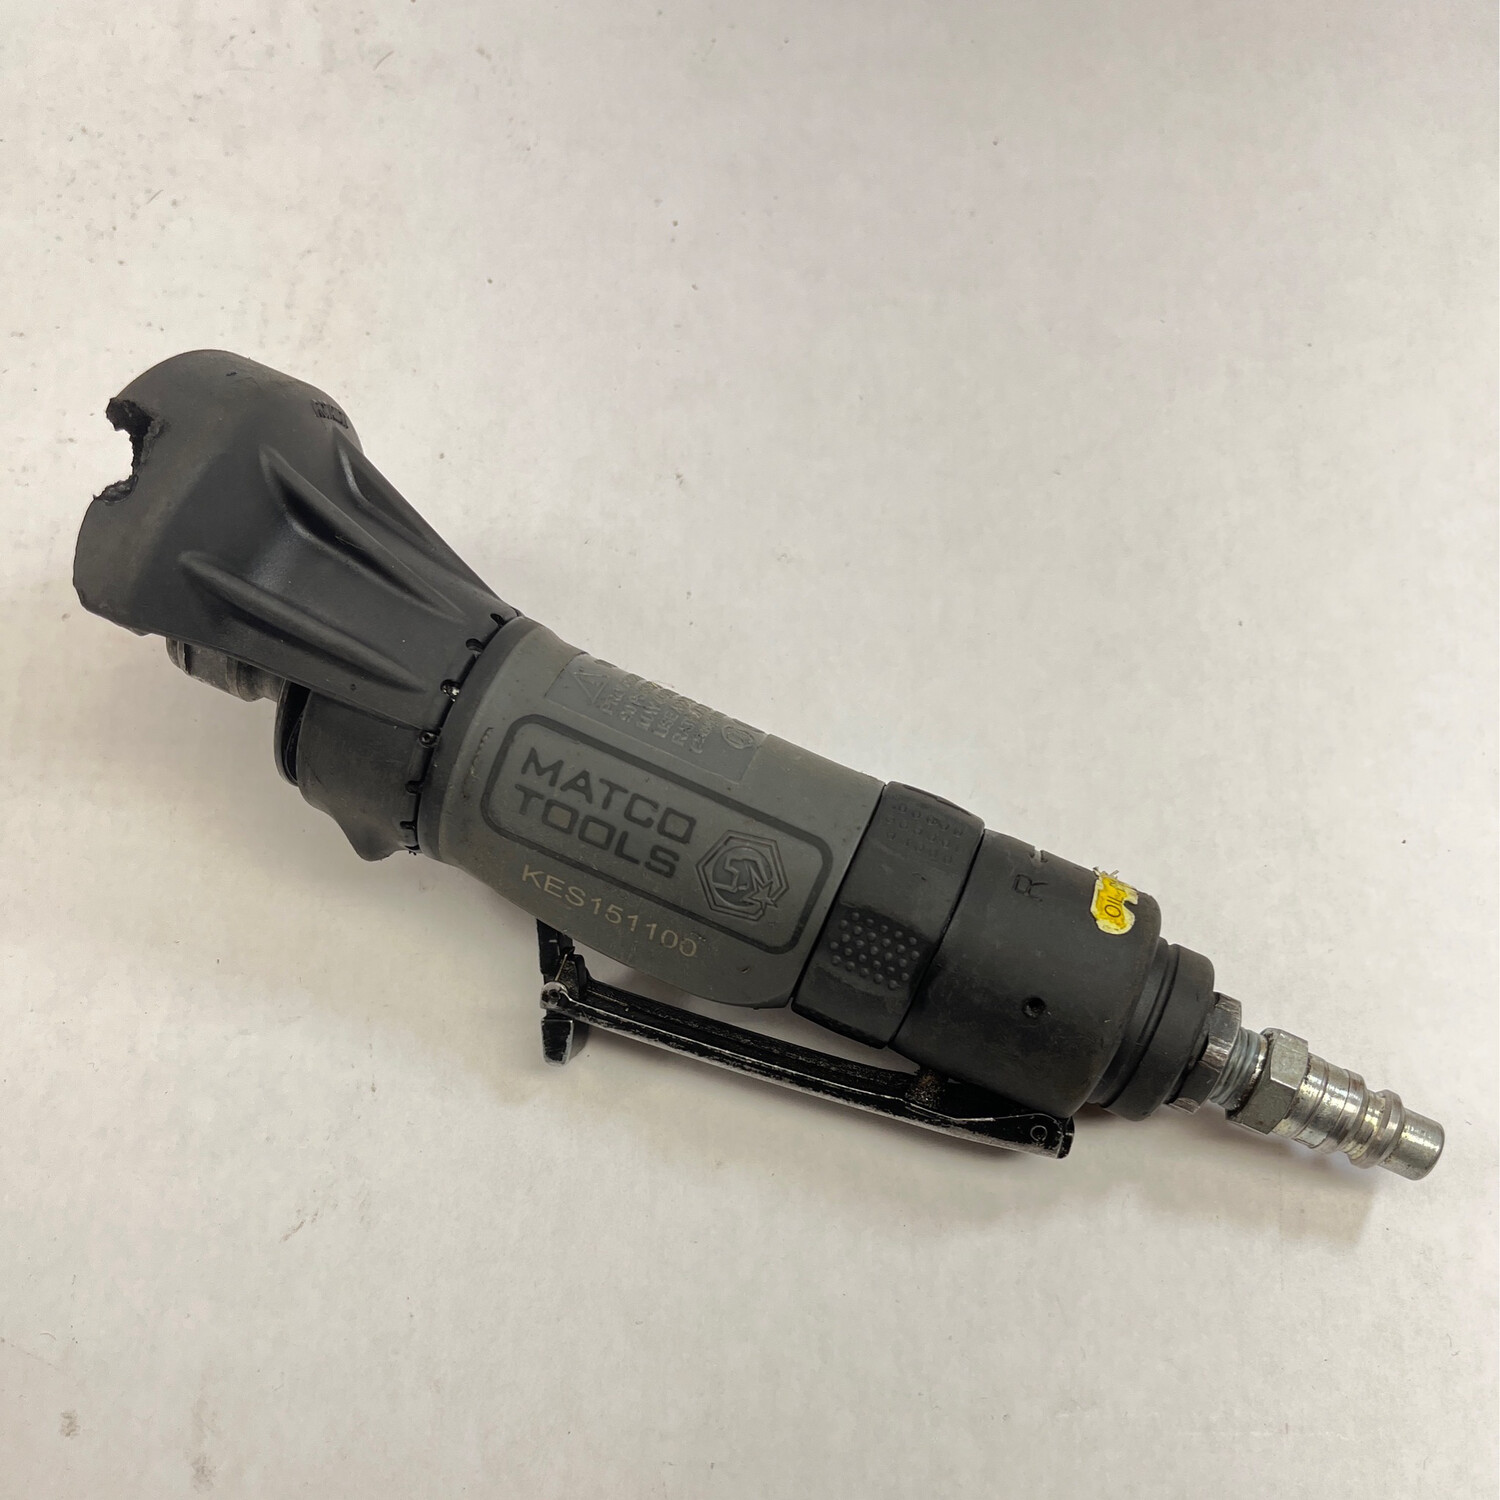 Matco Tools Reversible Pneumatic Air 3” Cut Off Tool, MT2871R